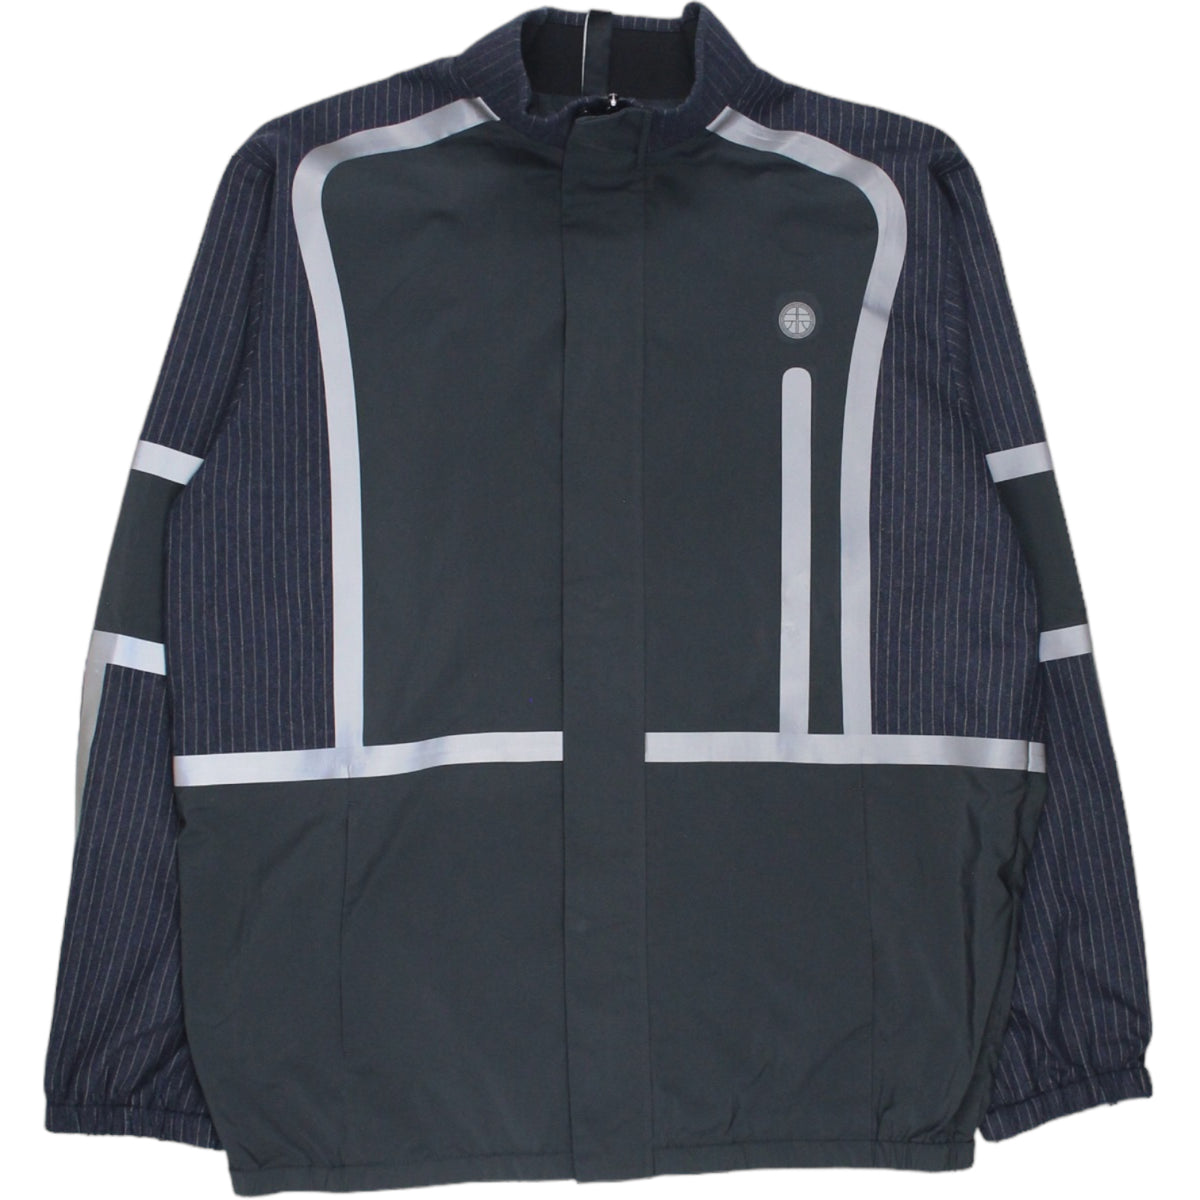 Astrid Andersen Grey/Blue Pinstripe Reflective Jacket